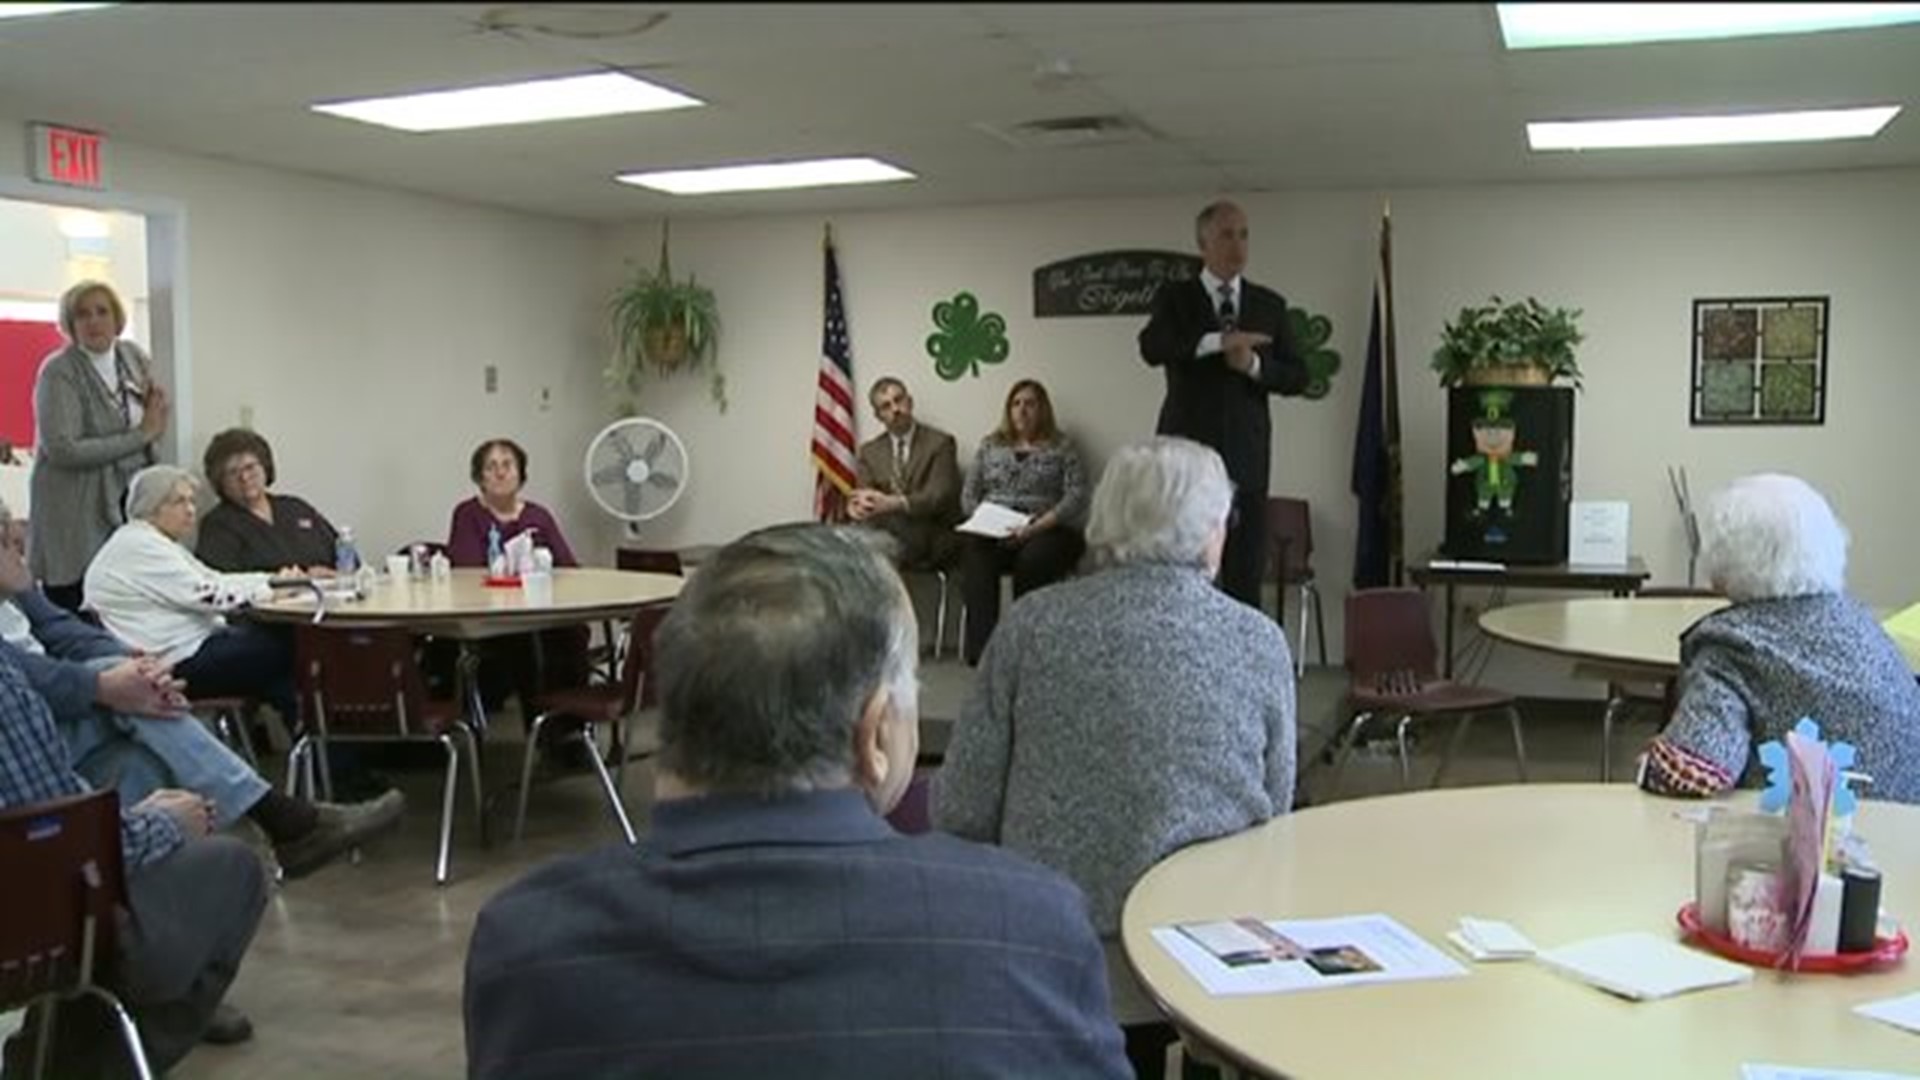 Senator Casey Visits Senior Center in Luzerne County